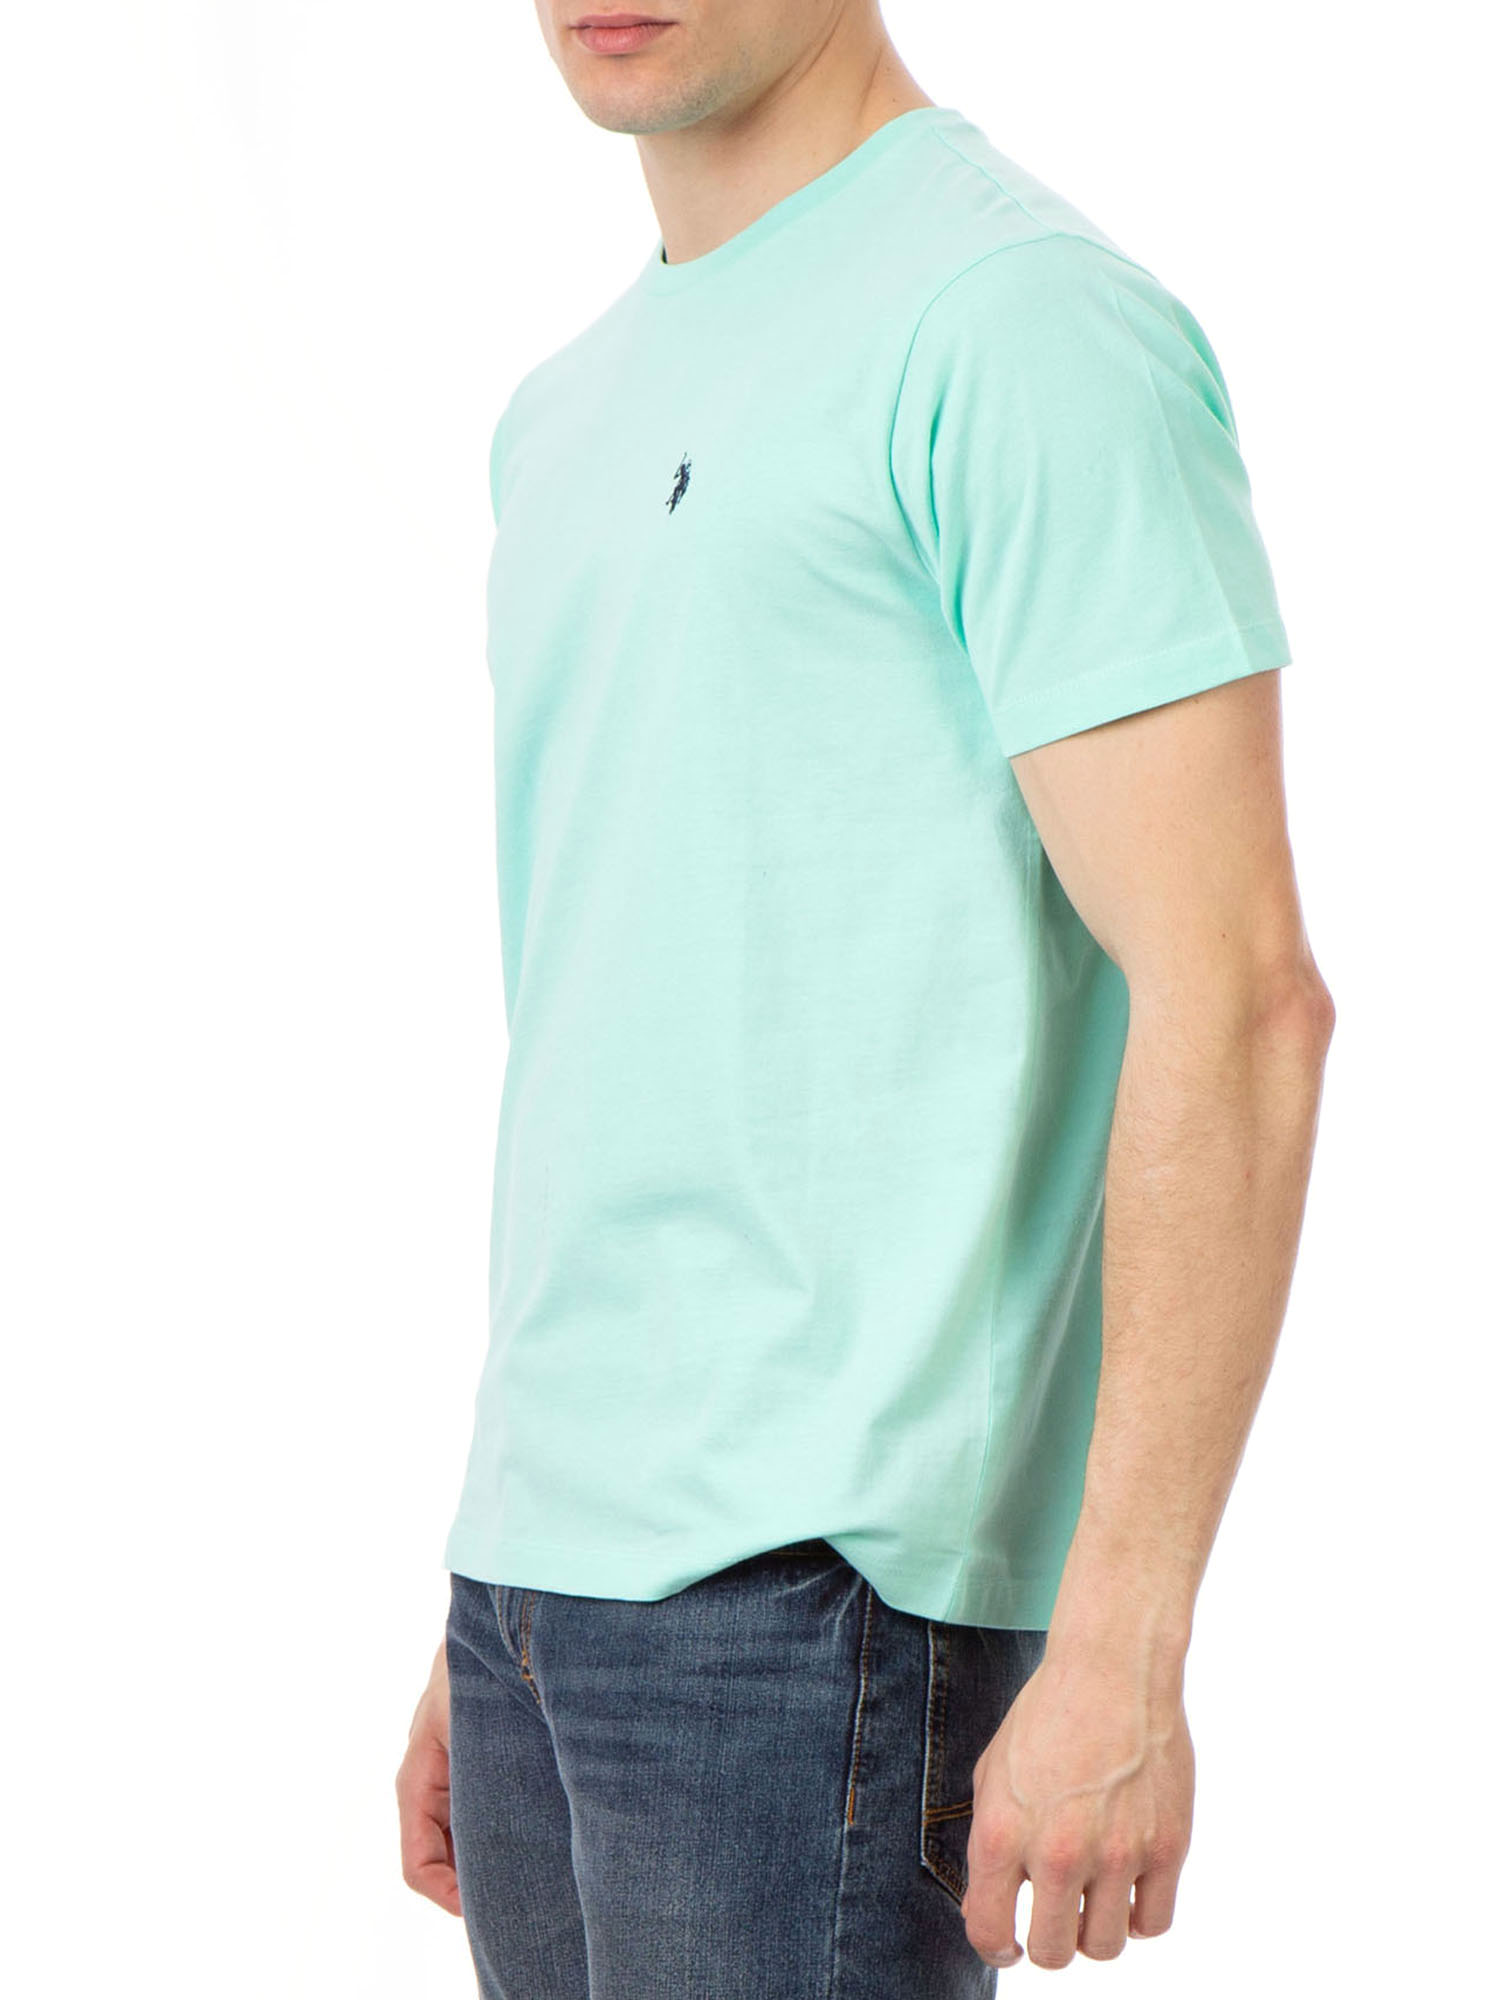 U.S. Polo Assn. Men's Short Sleeve Crew Neck T-Shirt - image 3 of 3